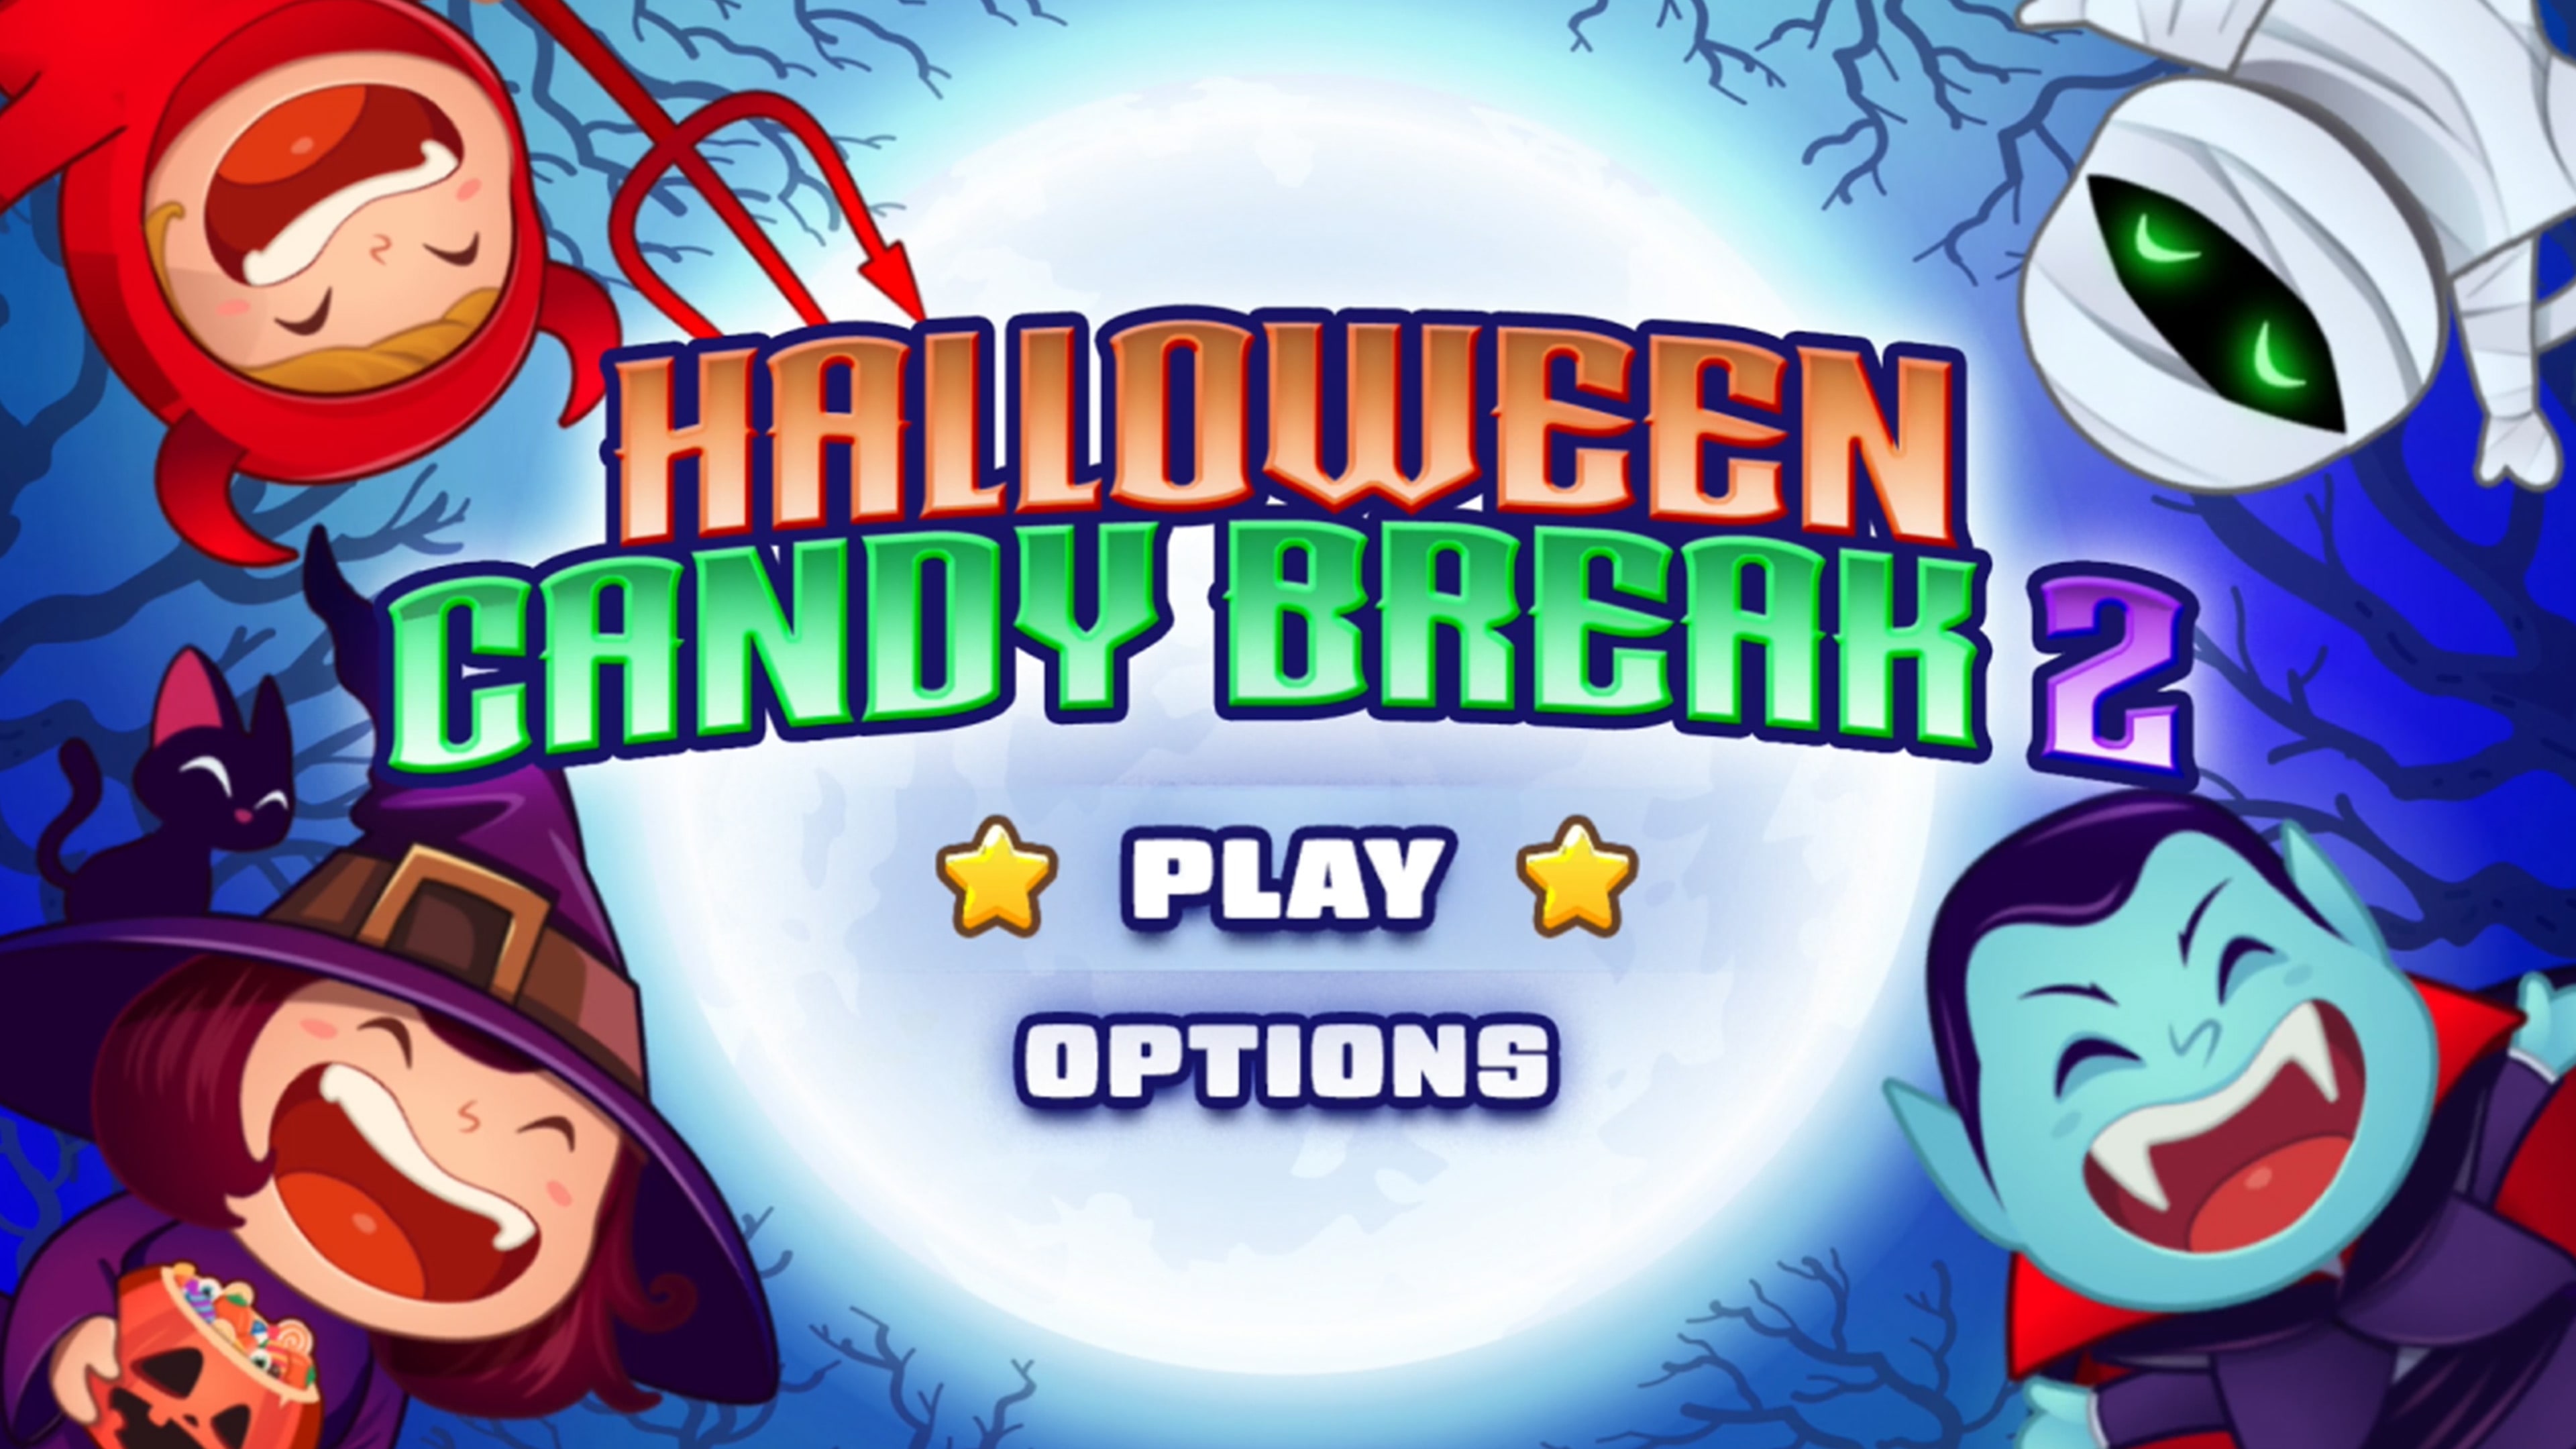 Halloween Candy Break 2 Head To Head — Avatar Full Game Bundle on PS4 —  price history, screenshots, discounts • USA